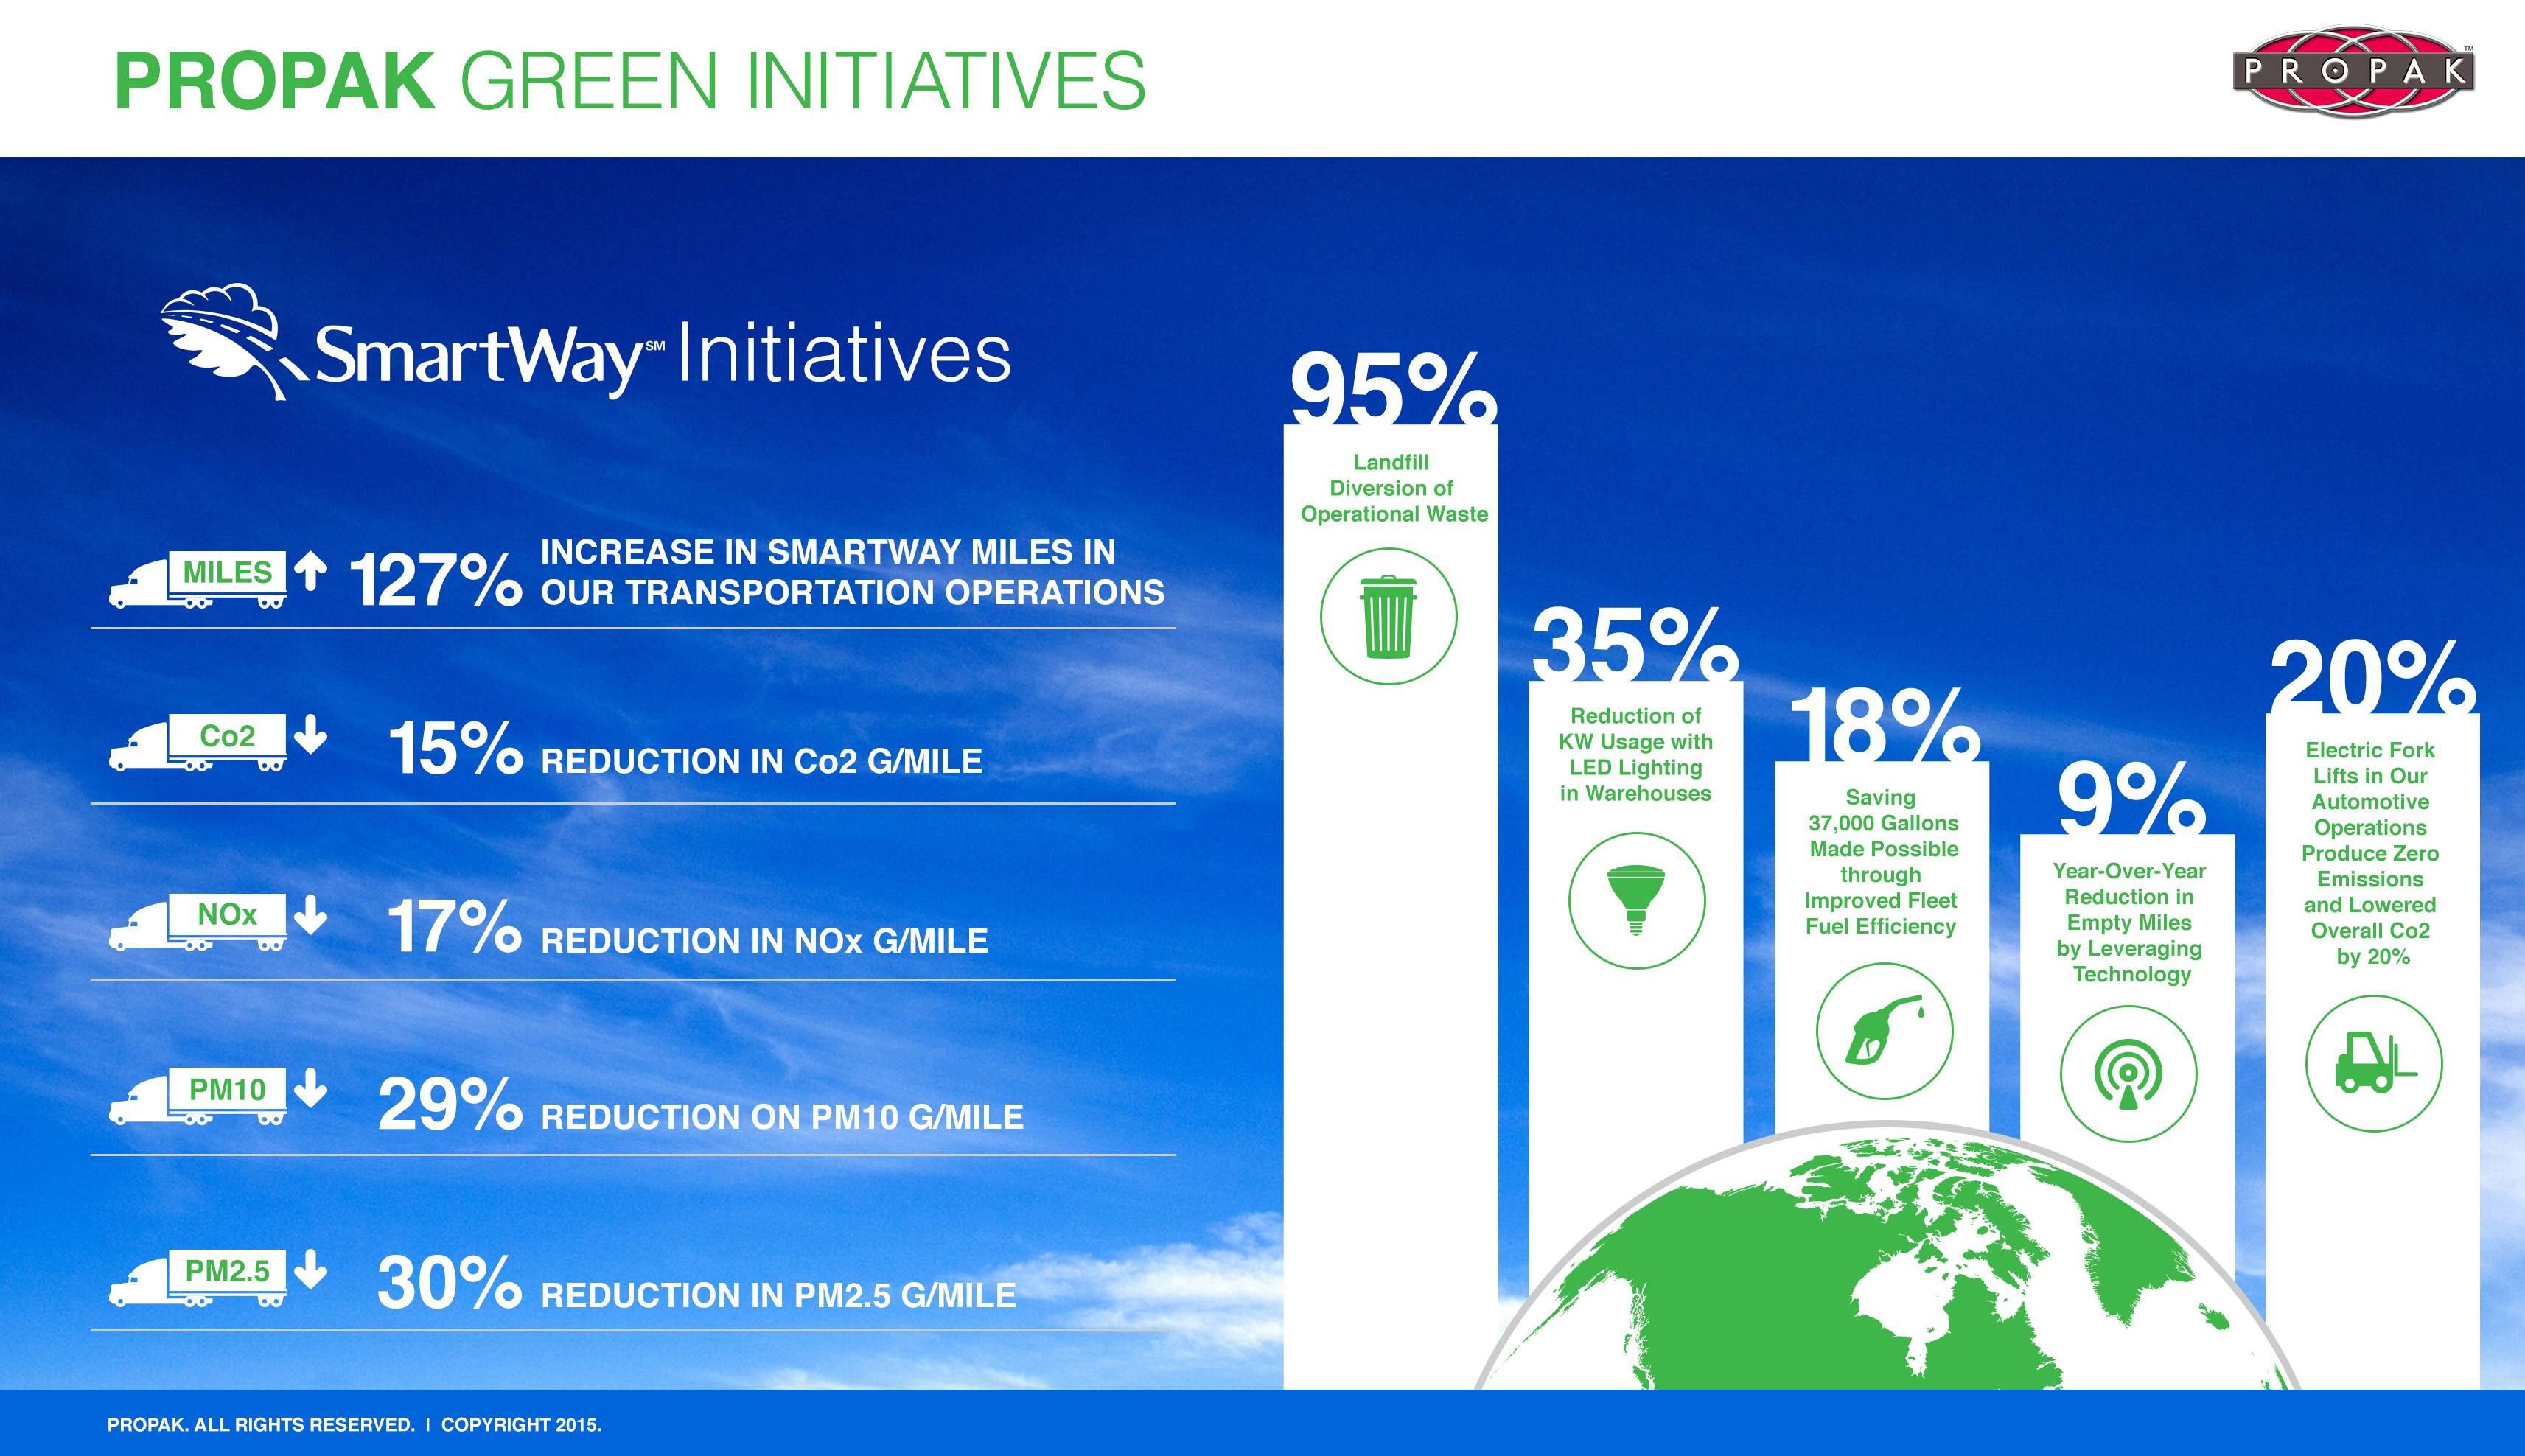 Propak's Green Initiatives: The SmartWay Program